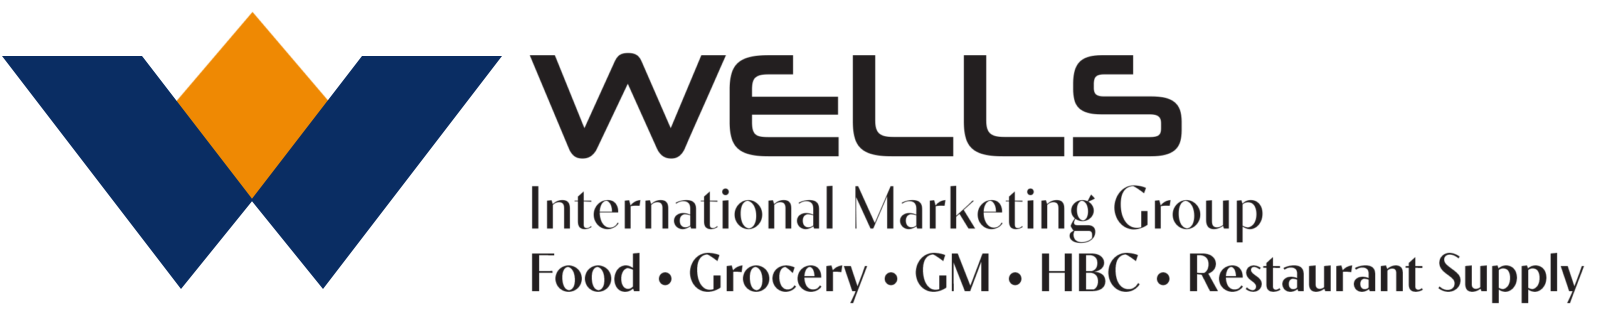 Wells International Marketing Group